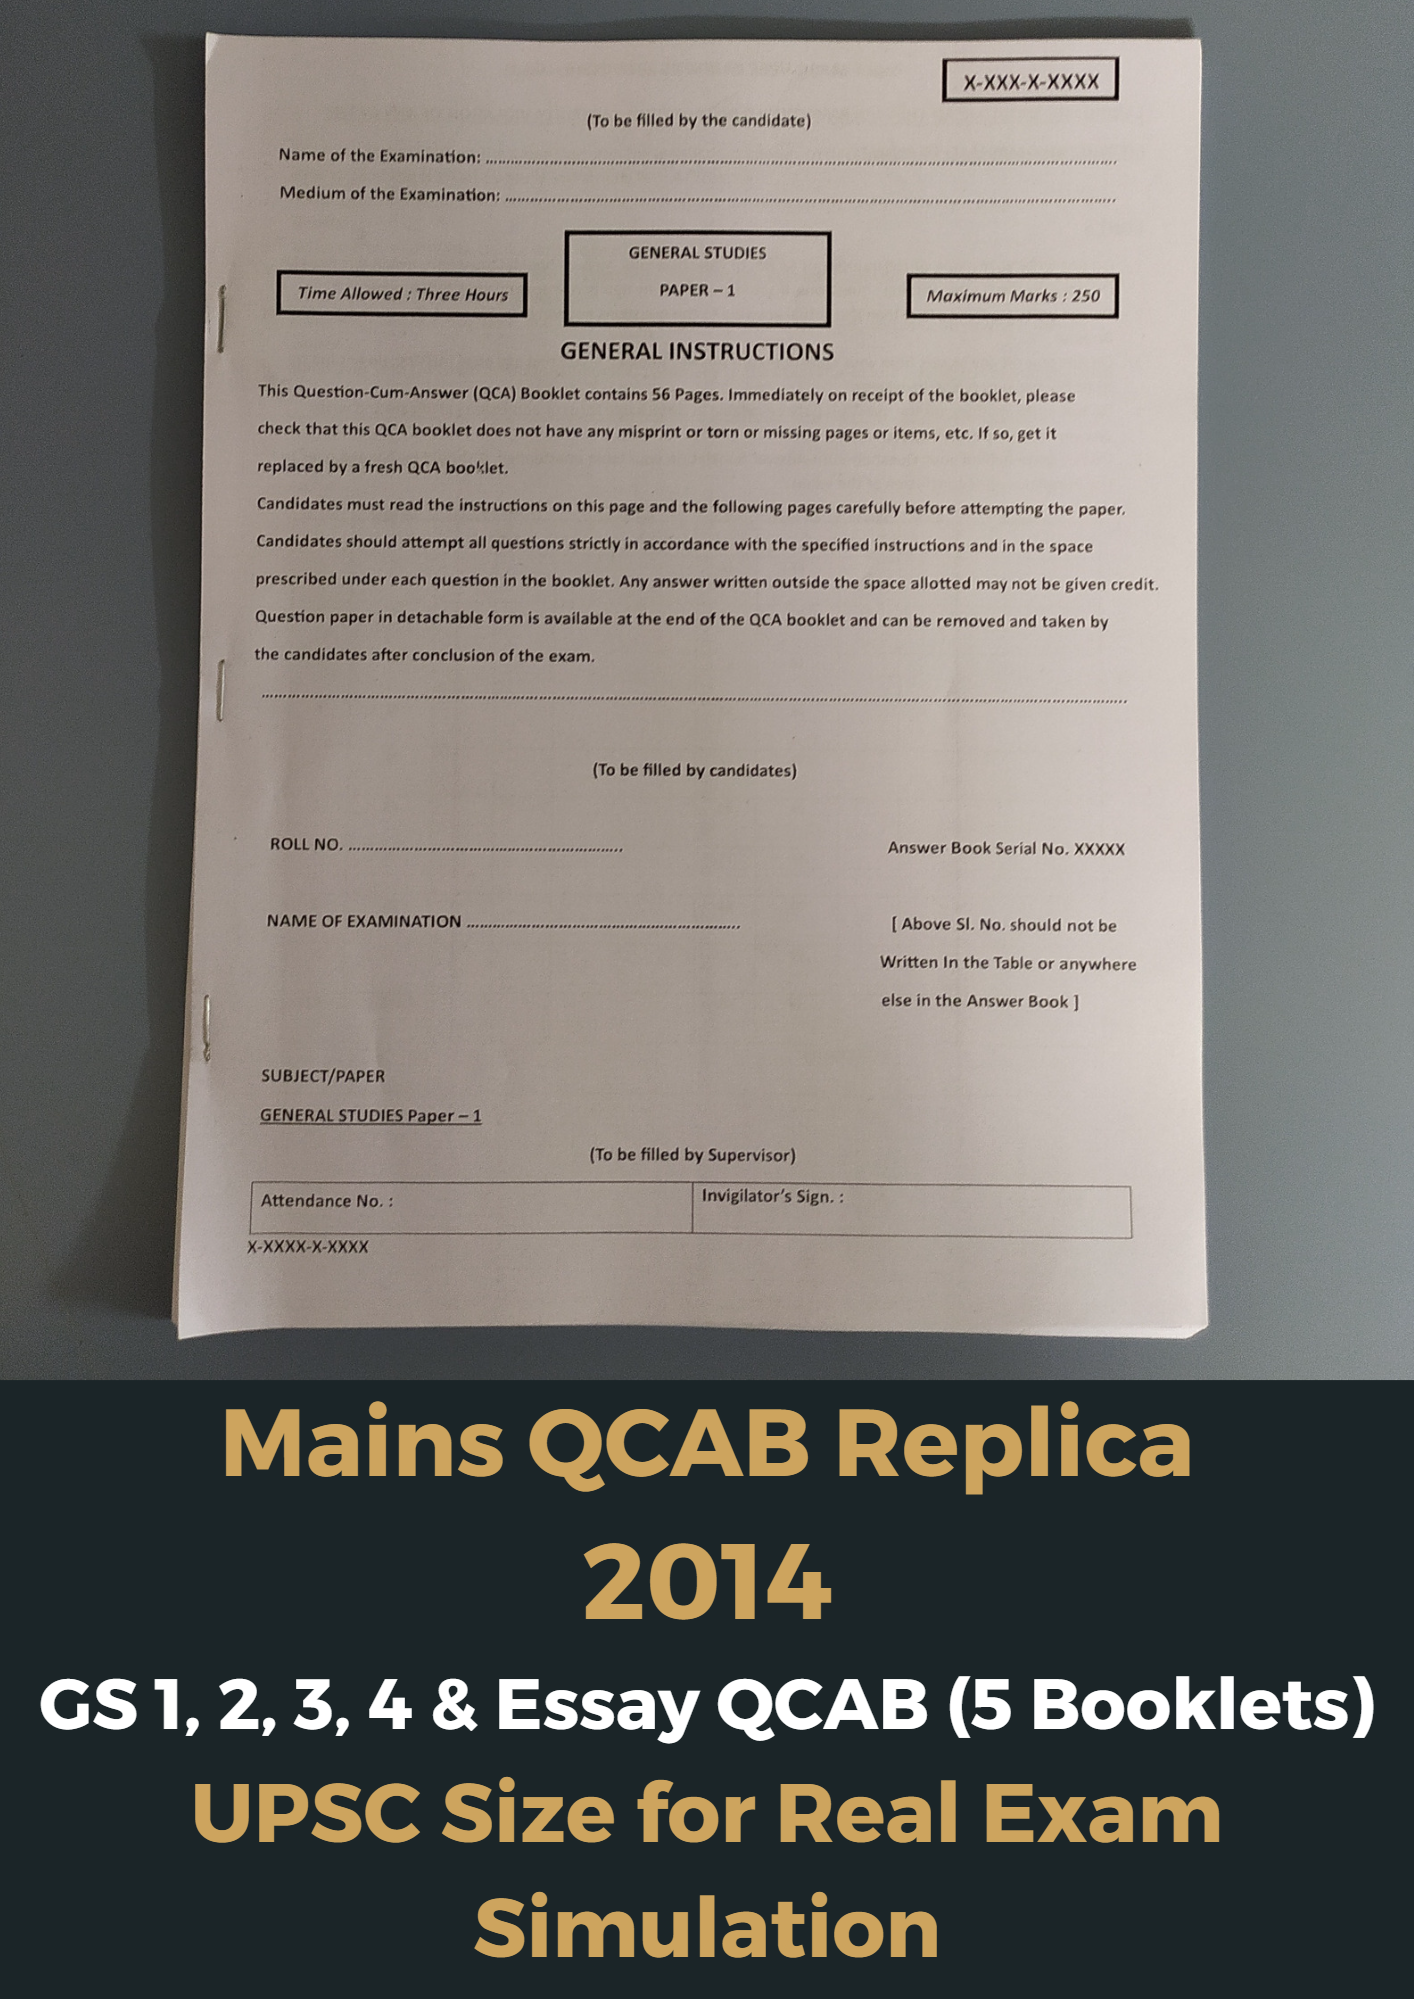 2014 Mains QCAB Replica - GS 1,2,3,4 & Essay (5 Booklets) - UPSC QCAB Size - For Real Exam Simulation